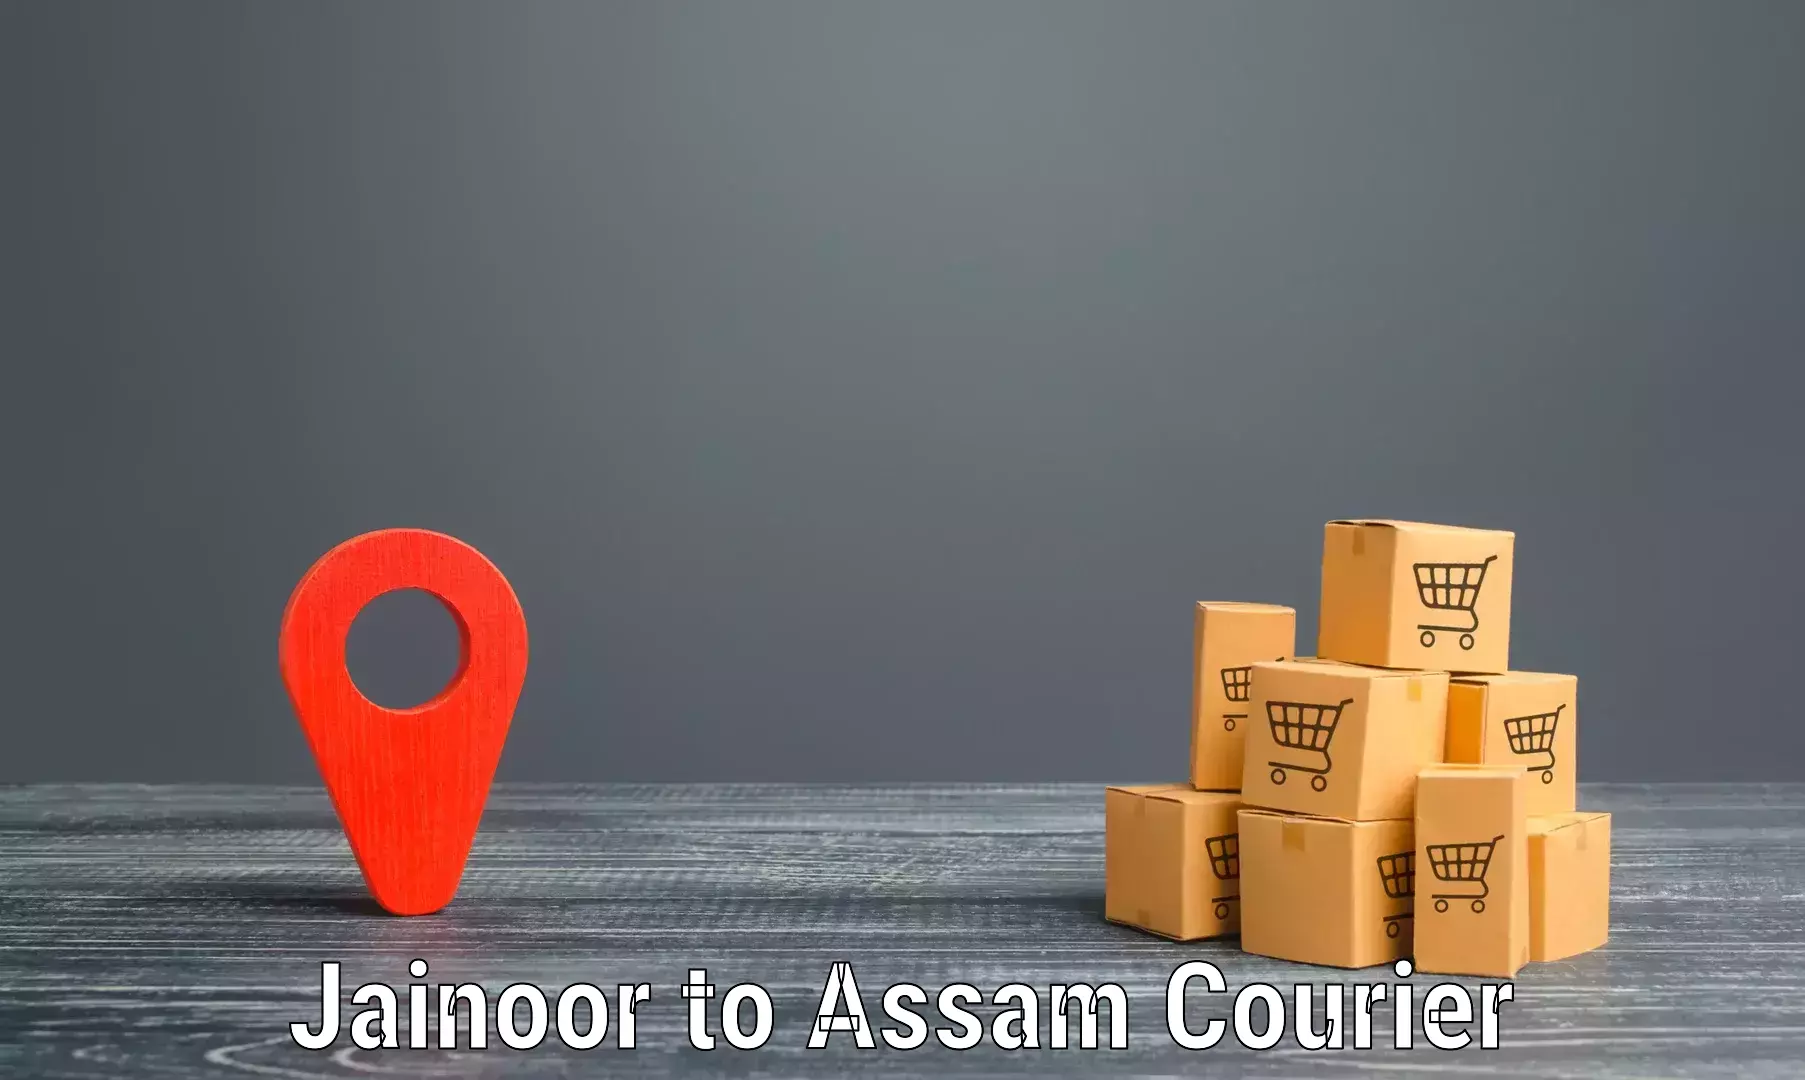 Courier service comparison Jainoor to Nagaon